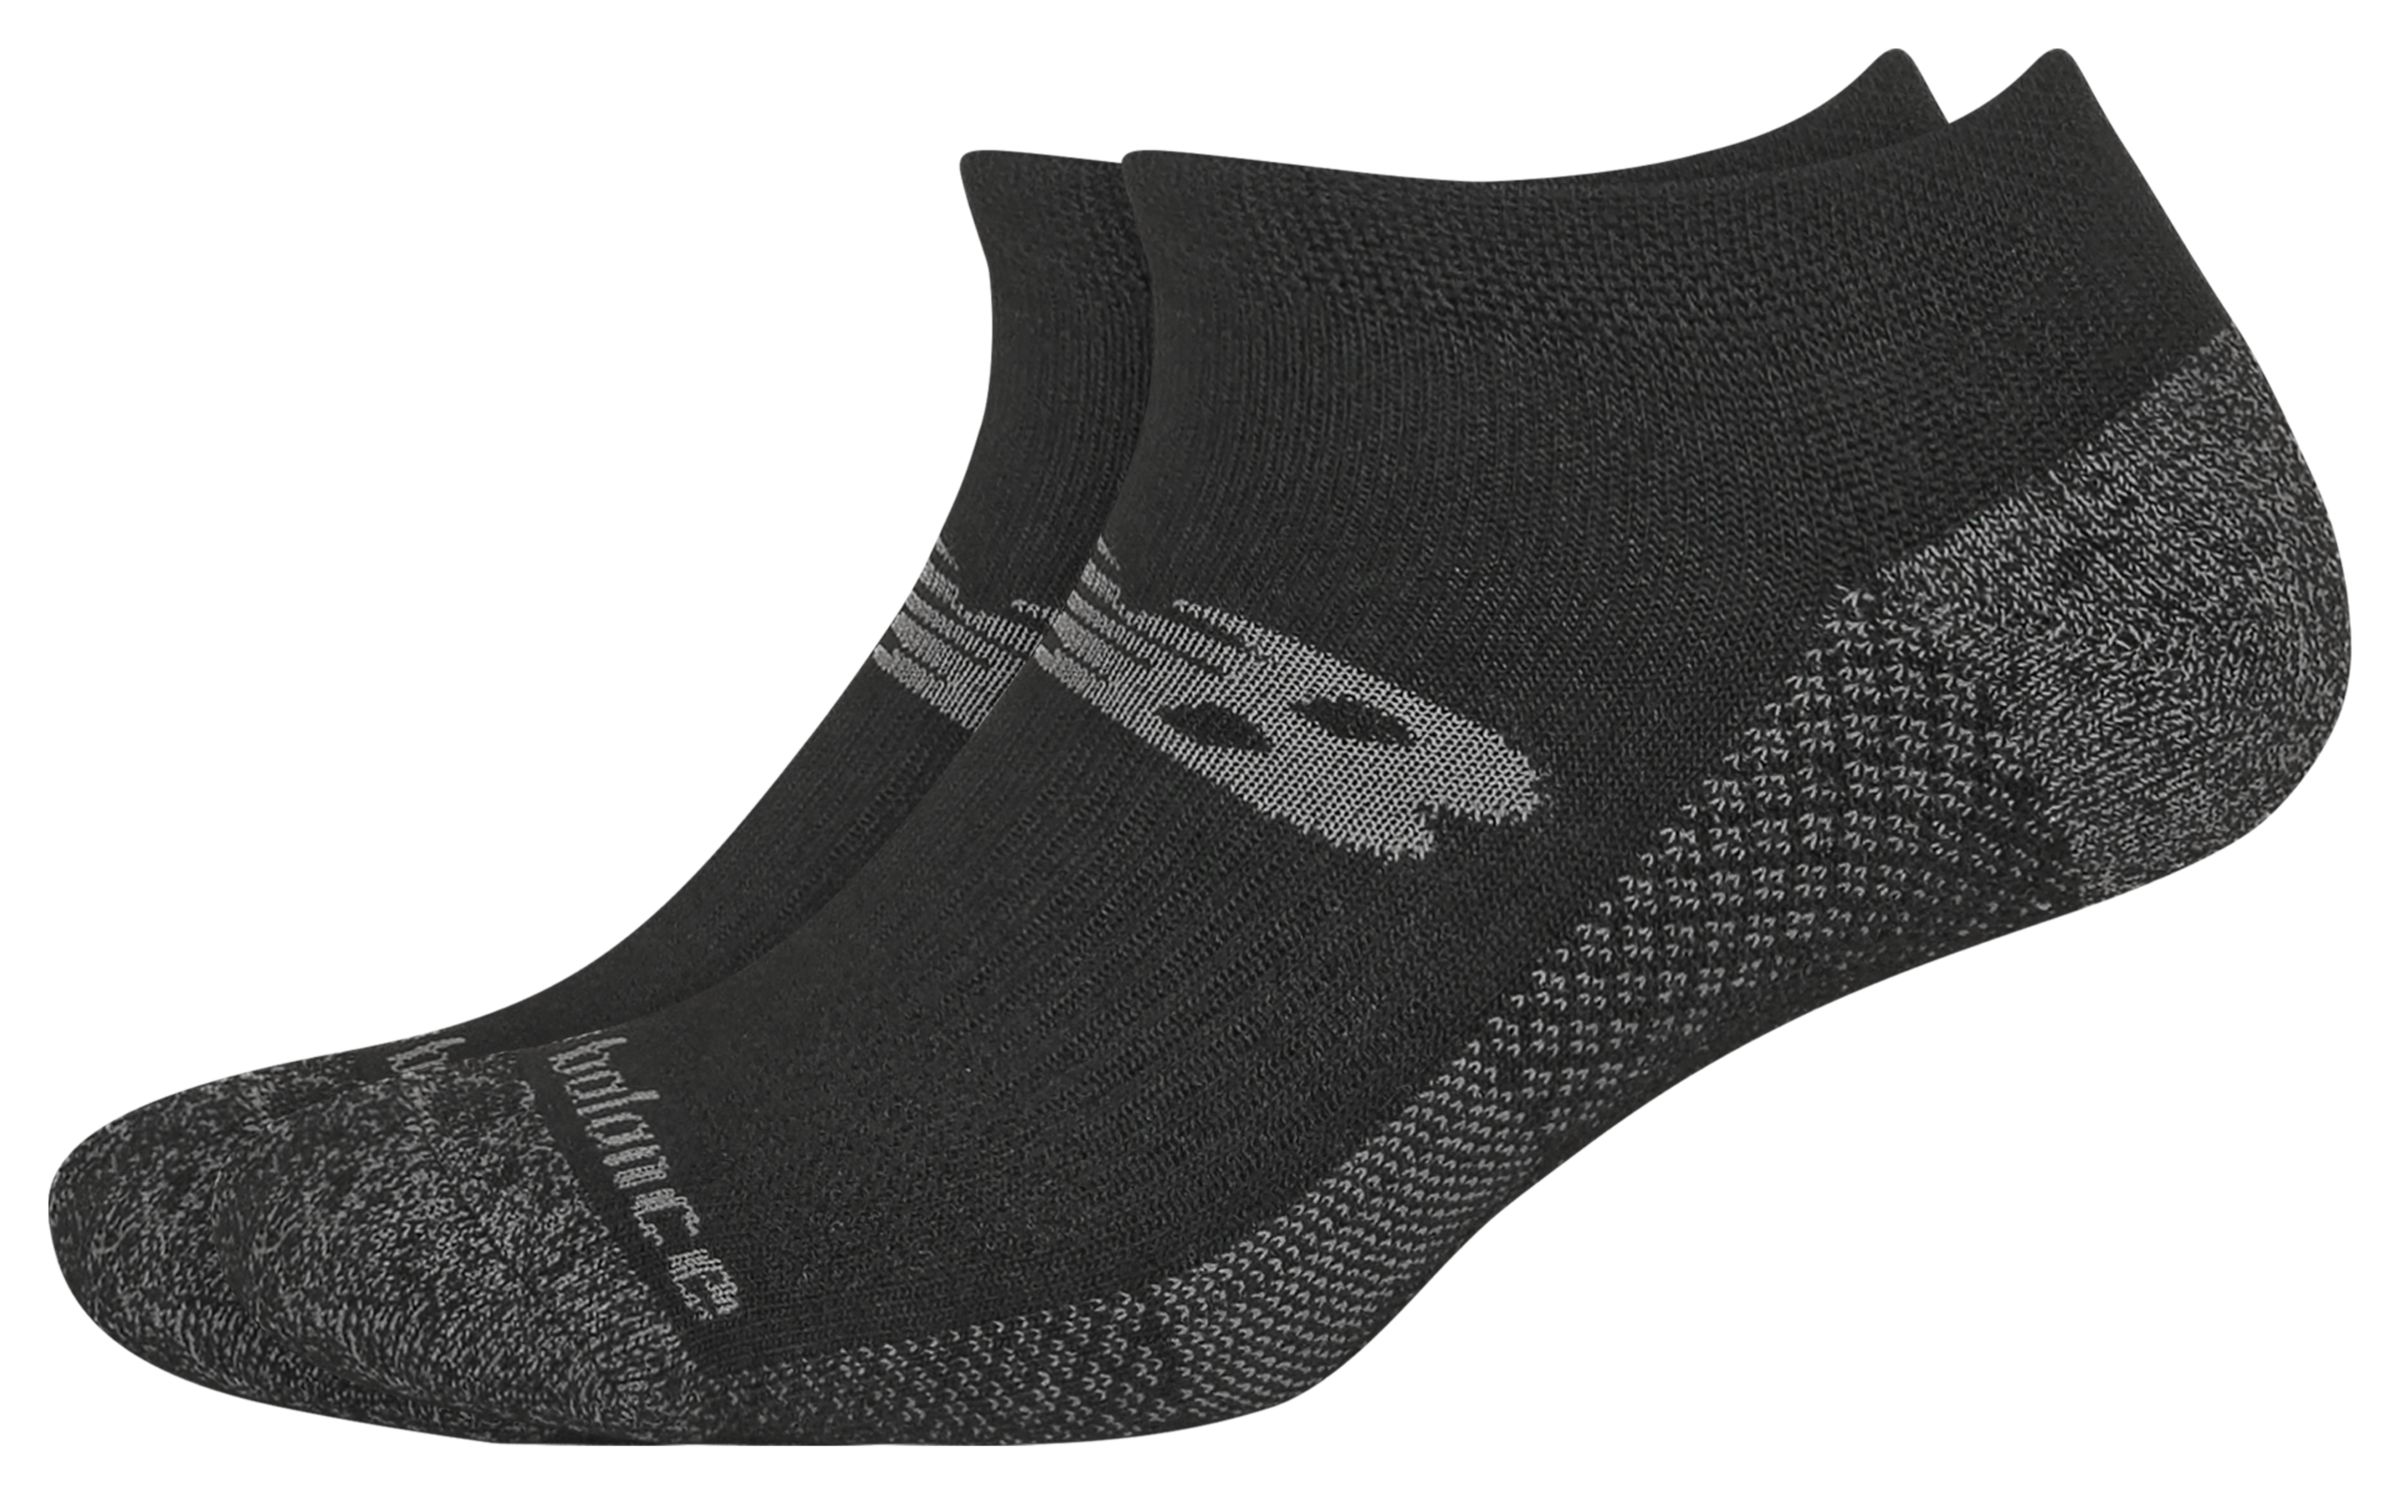 No-Show Athletic Socks for Men - New 